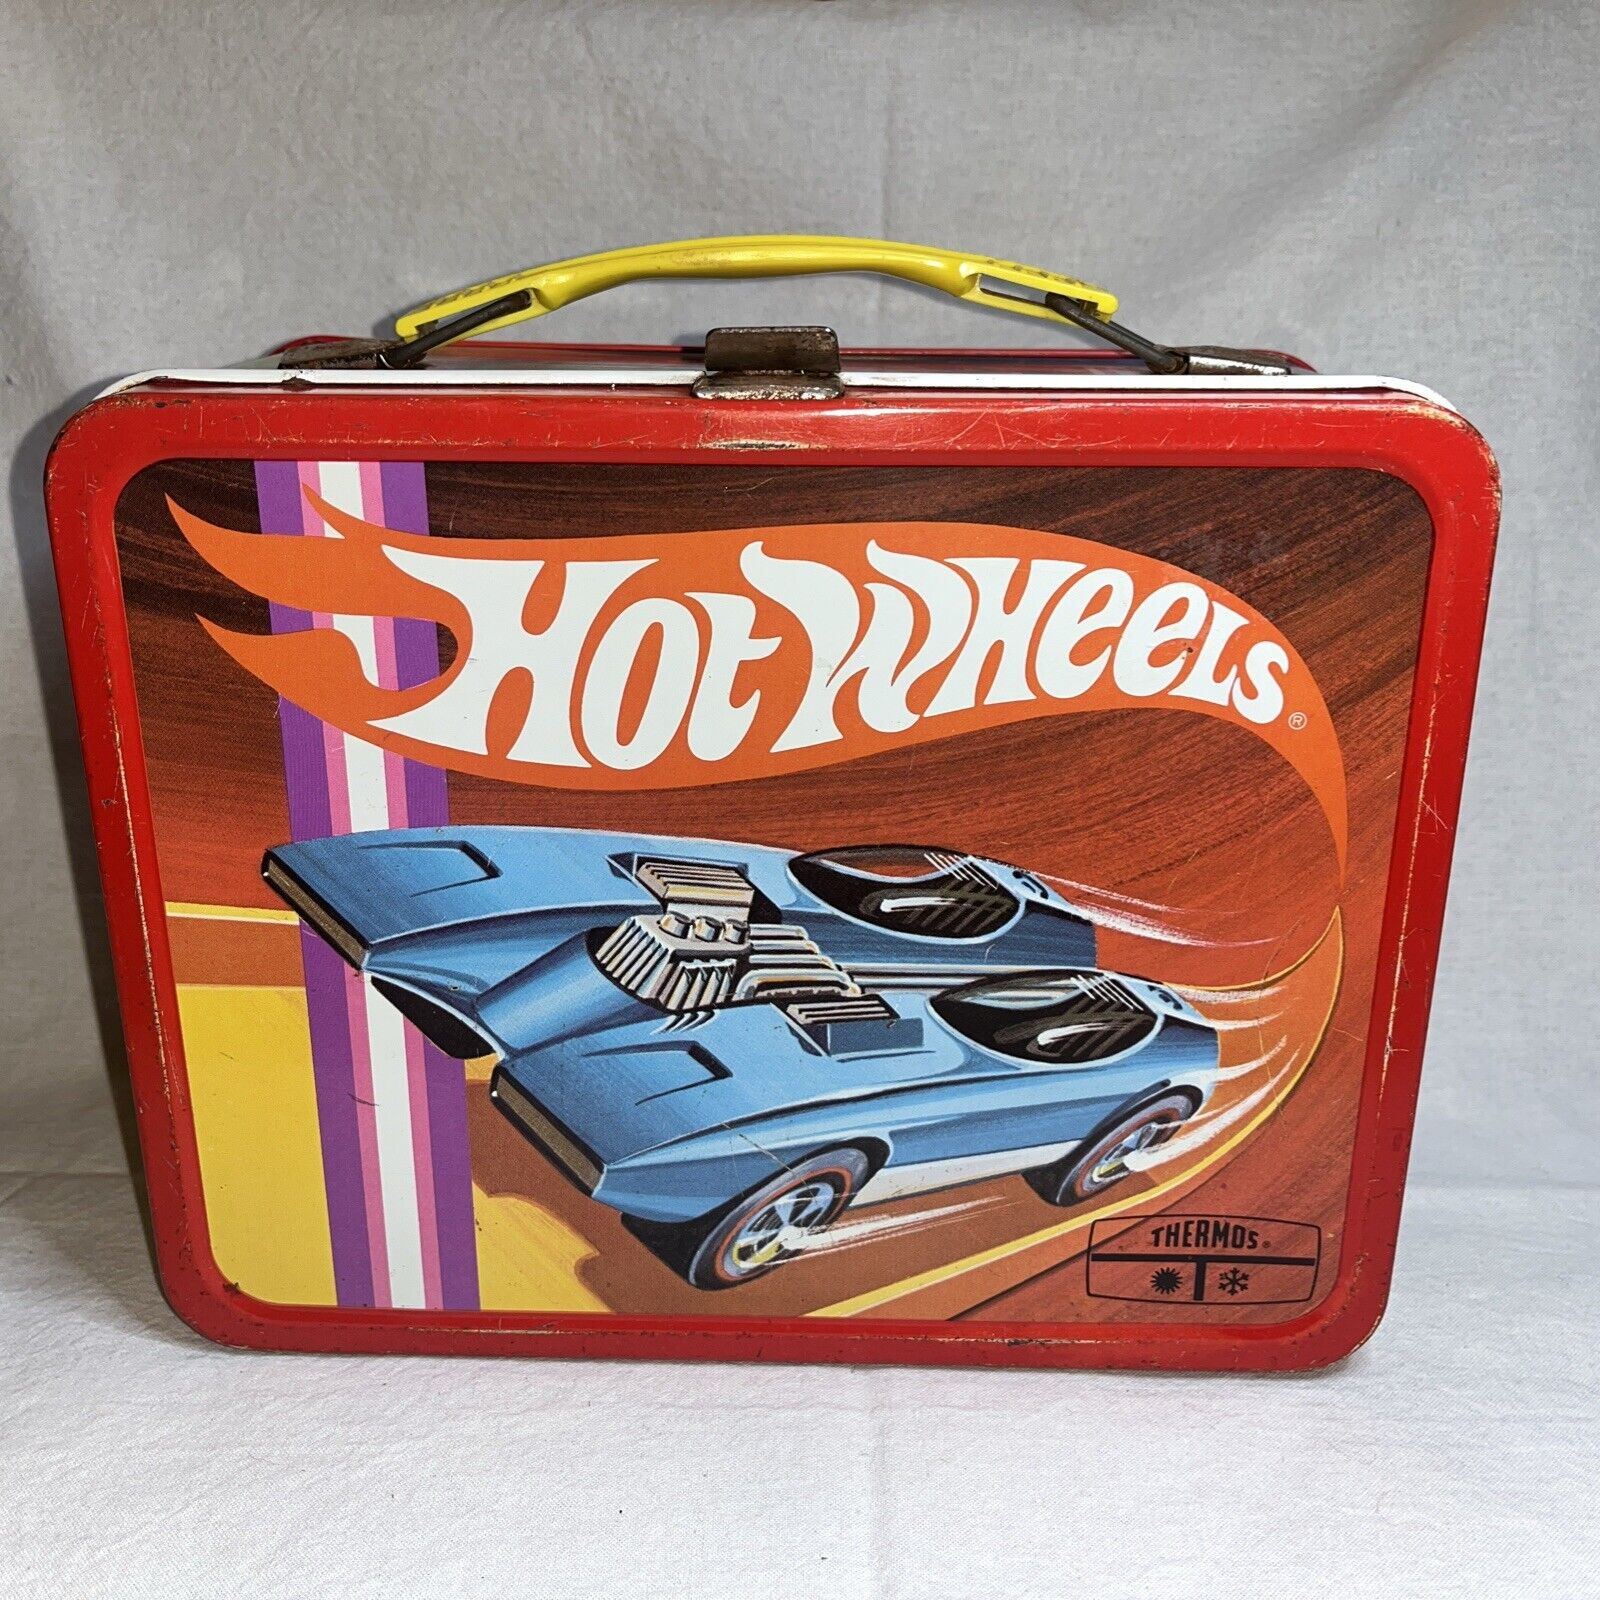 Hot Wheels 1969 Lunchbox